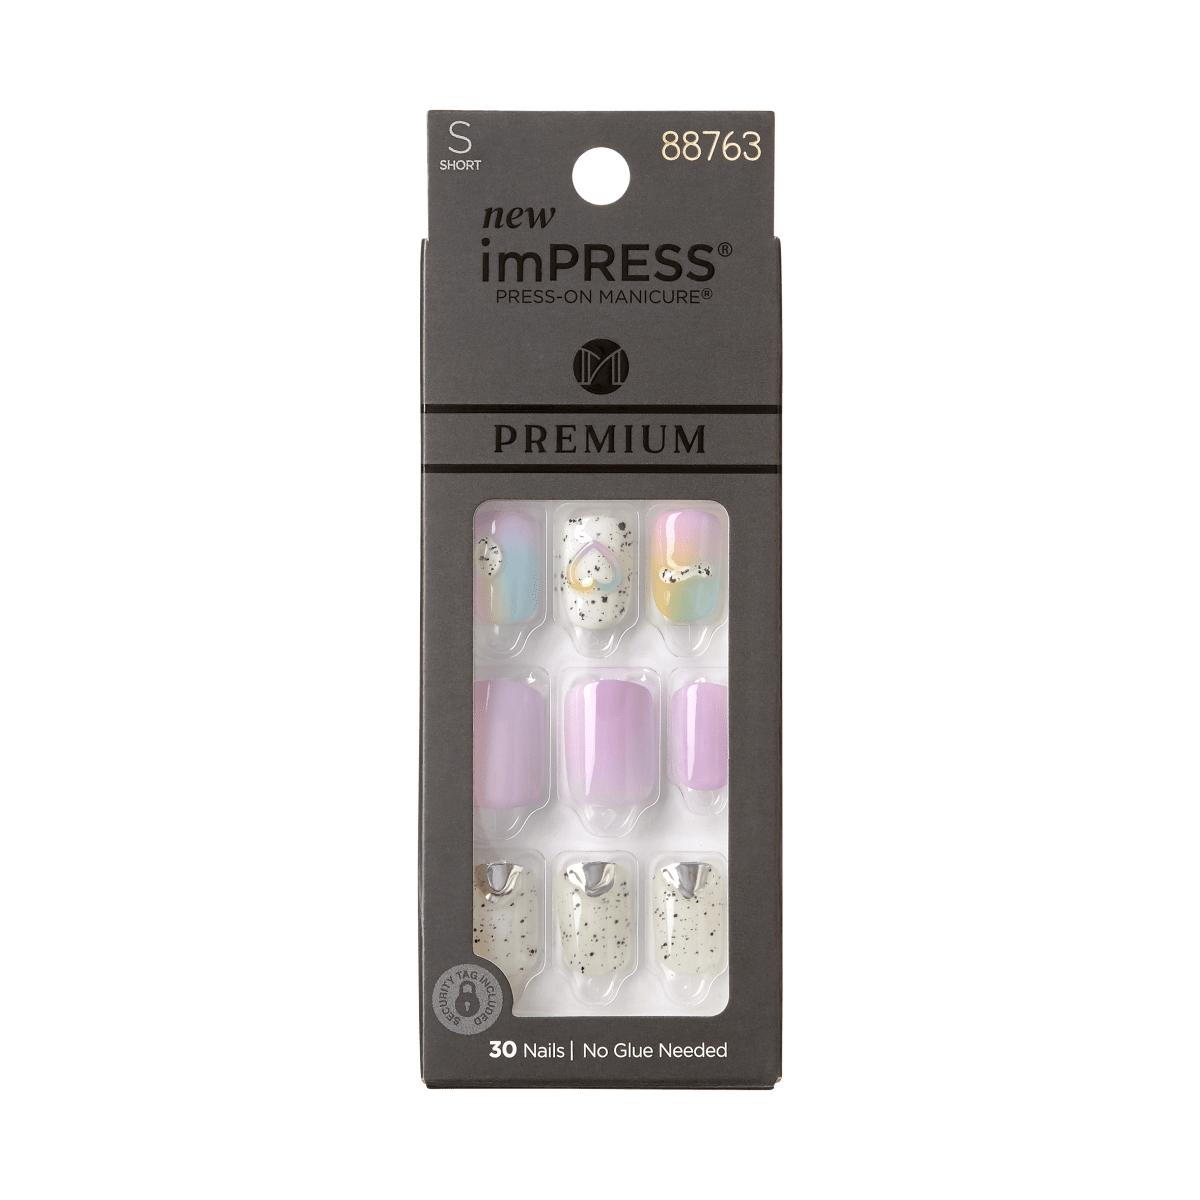 imPRESS Premium Press-On Manicure - Sweet Life